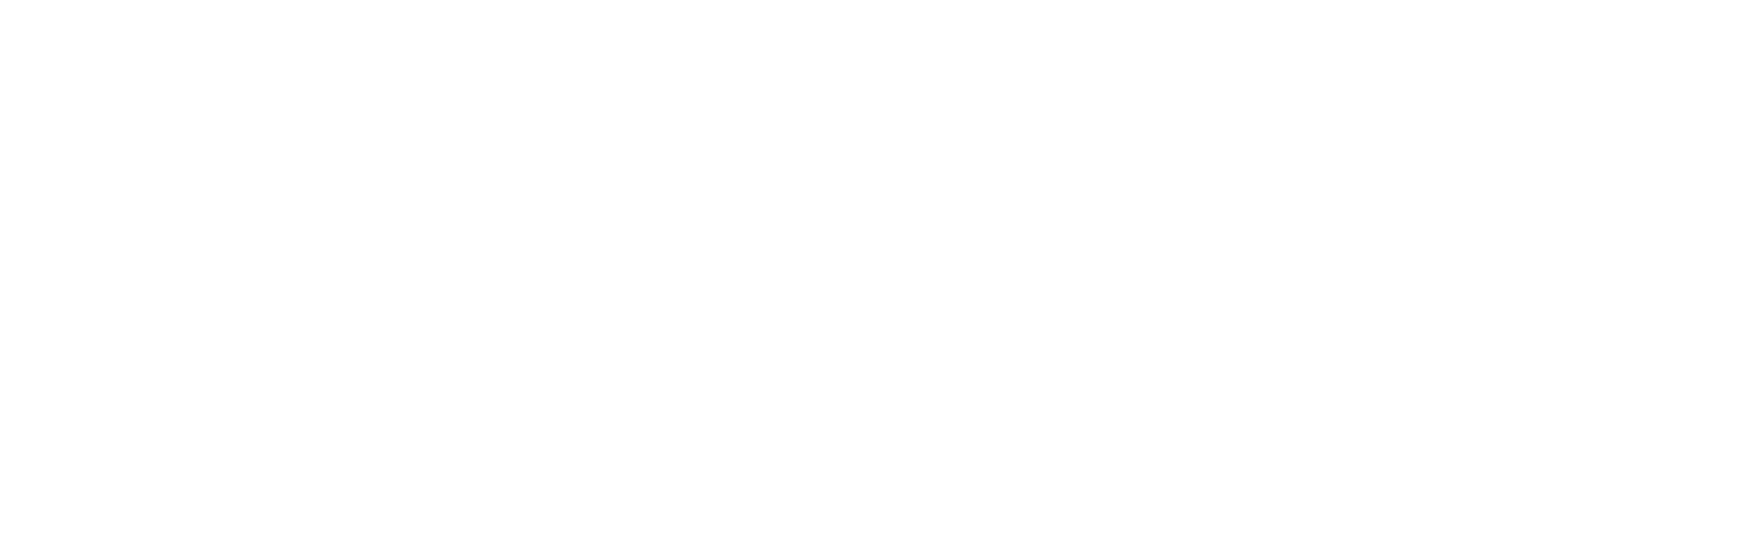 Hvidt Carl Ras logo